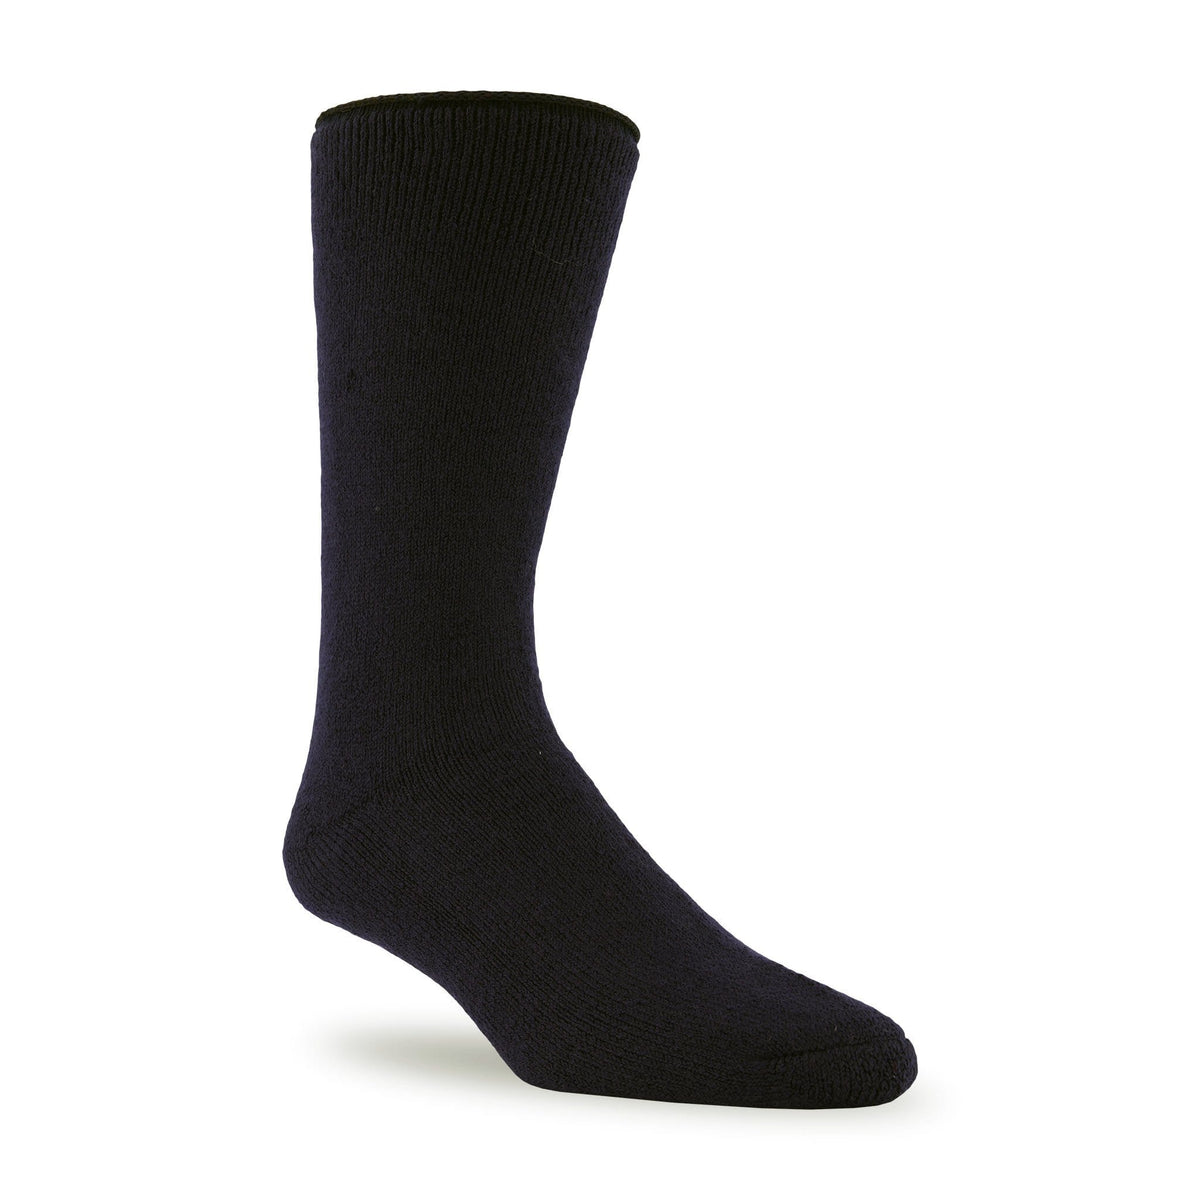 Kid's Merino Wool Thermal Socks, J.B.Field's 30 Below